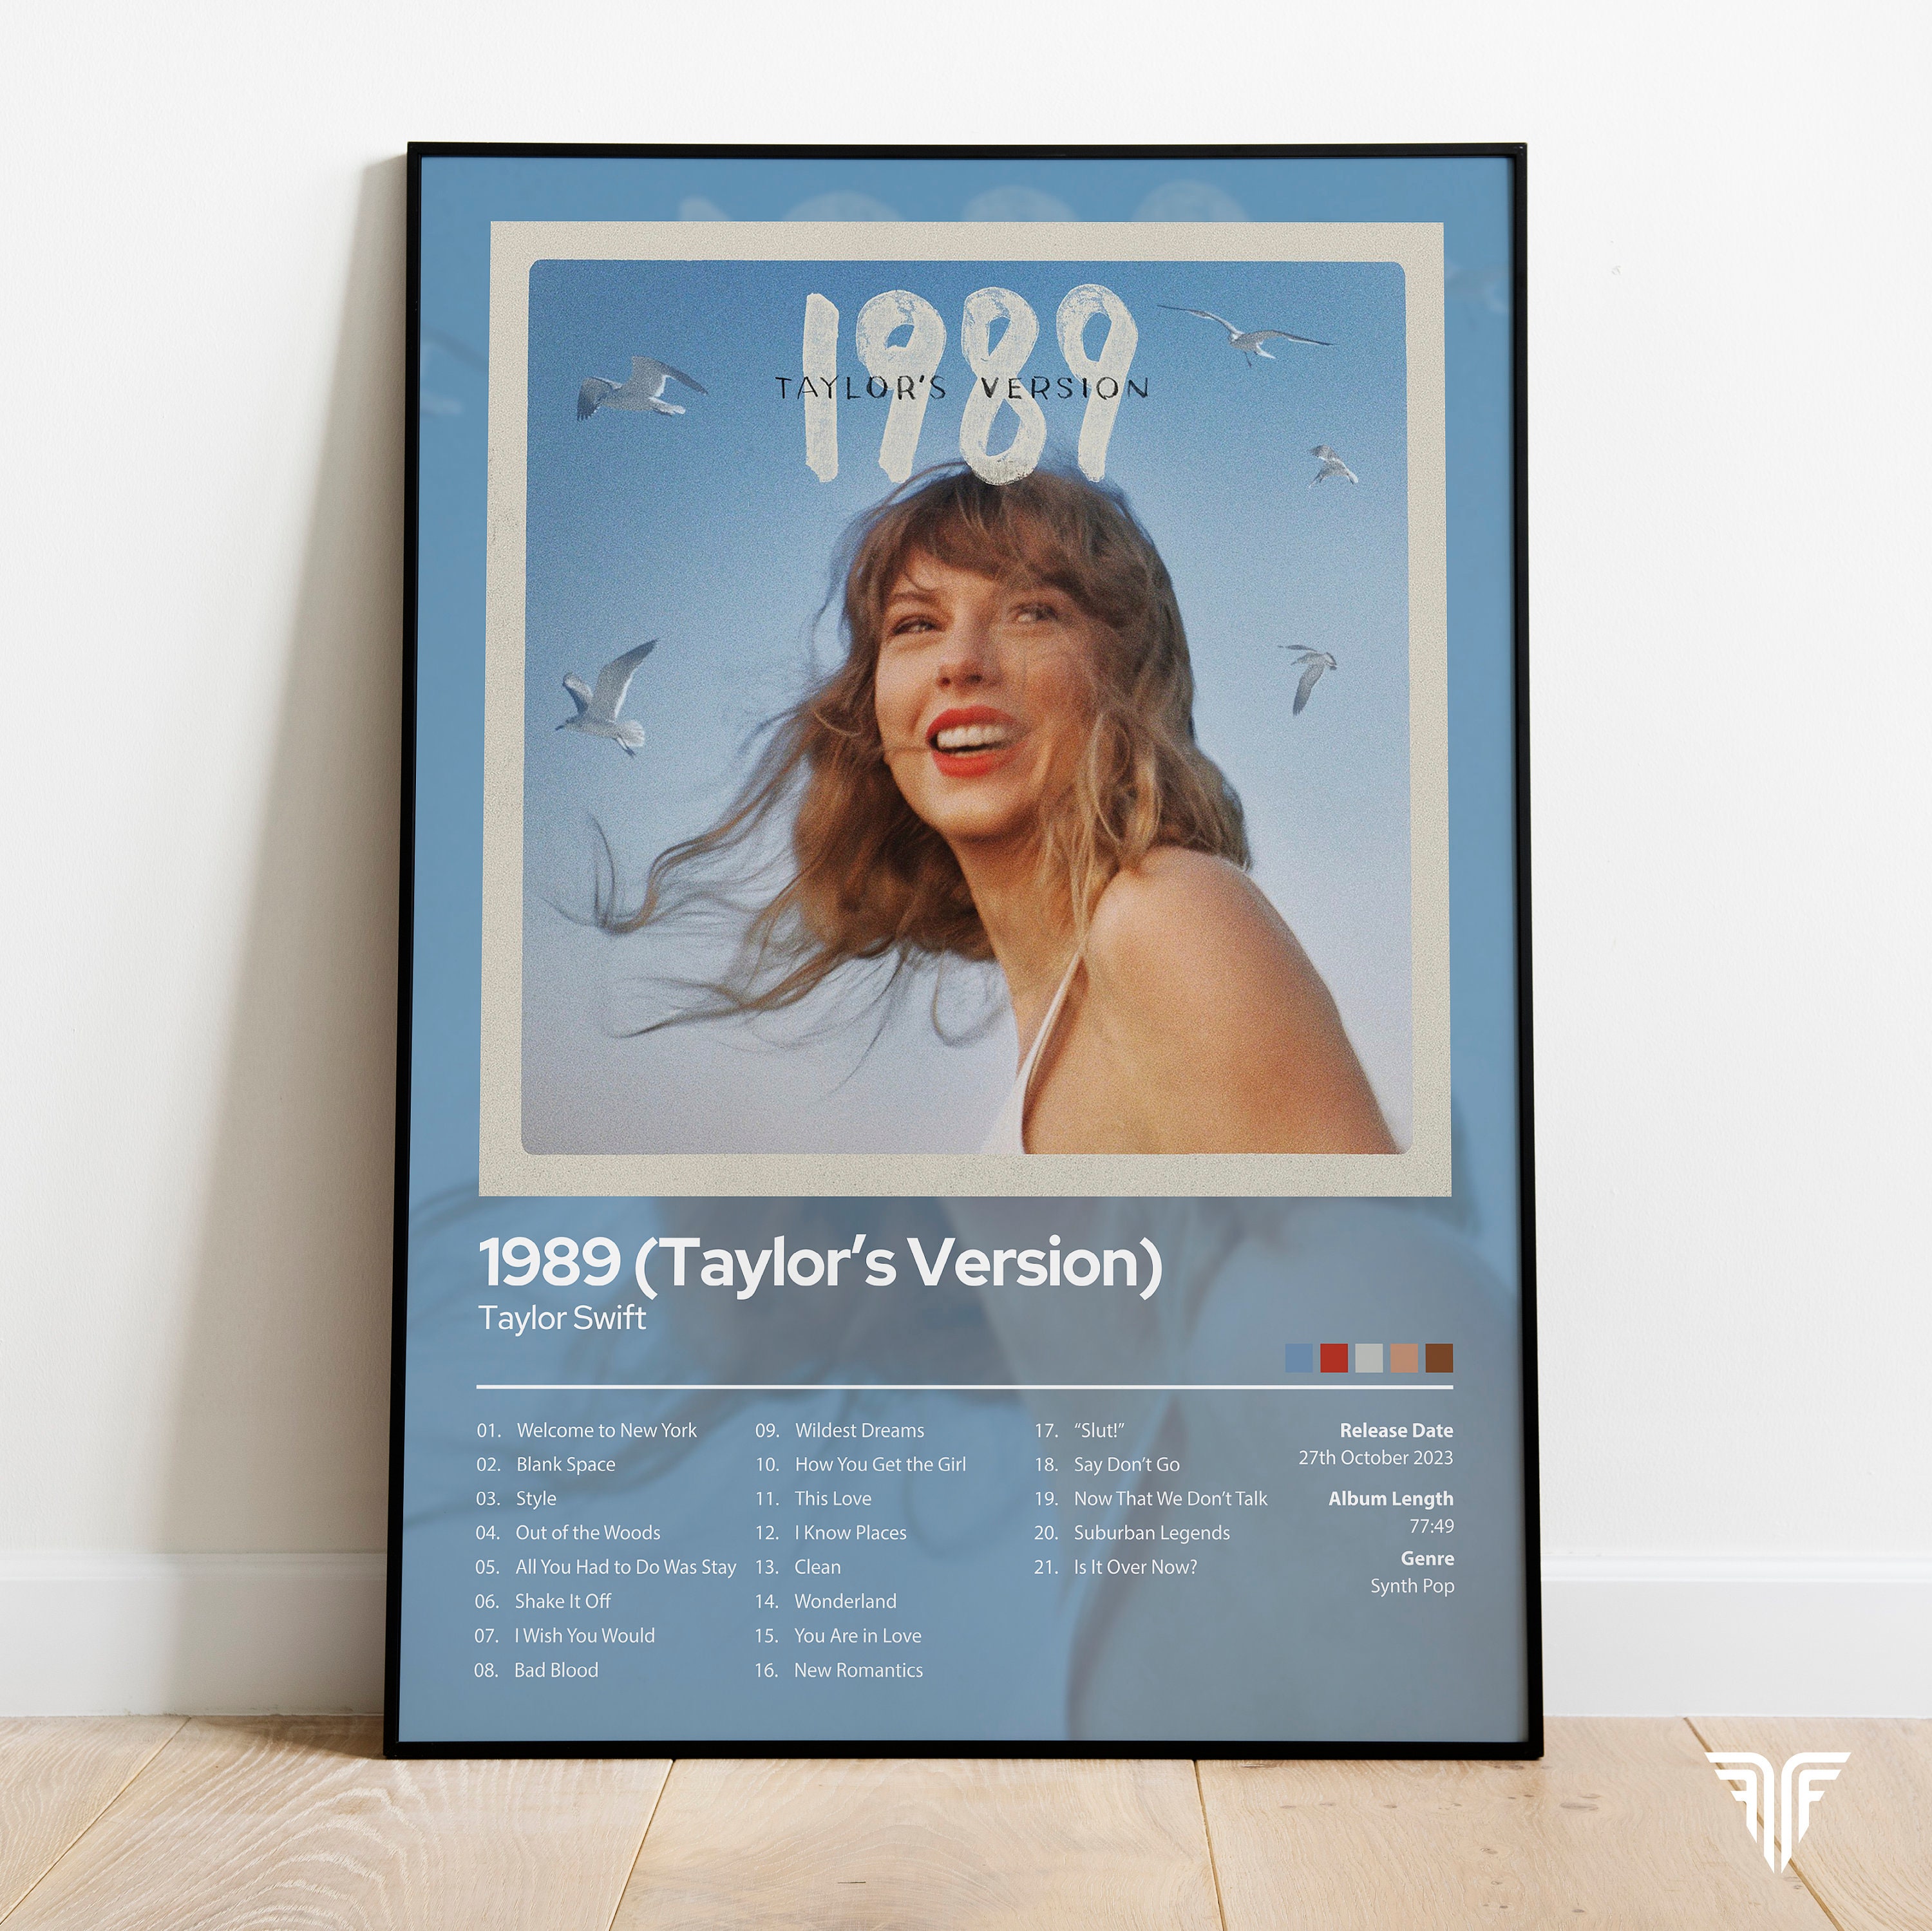 art.off.the.paige / Olivia on X: Taylor Swift 1989 Custom Funko Pop - Blue  skirt edition!! 💙💜 #taylor #swift #taylorswift #swiftie #swifties  #taylornation #lover #reputation #art #artist #custom #customfunkopop #funko  #funkopop #purple #fearless #